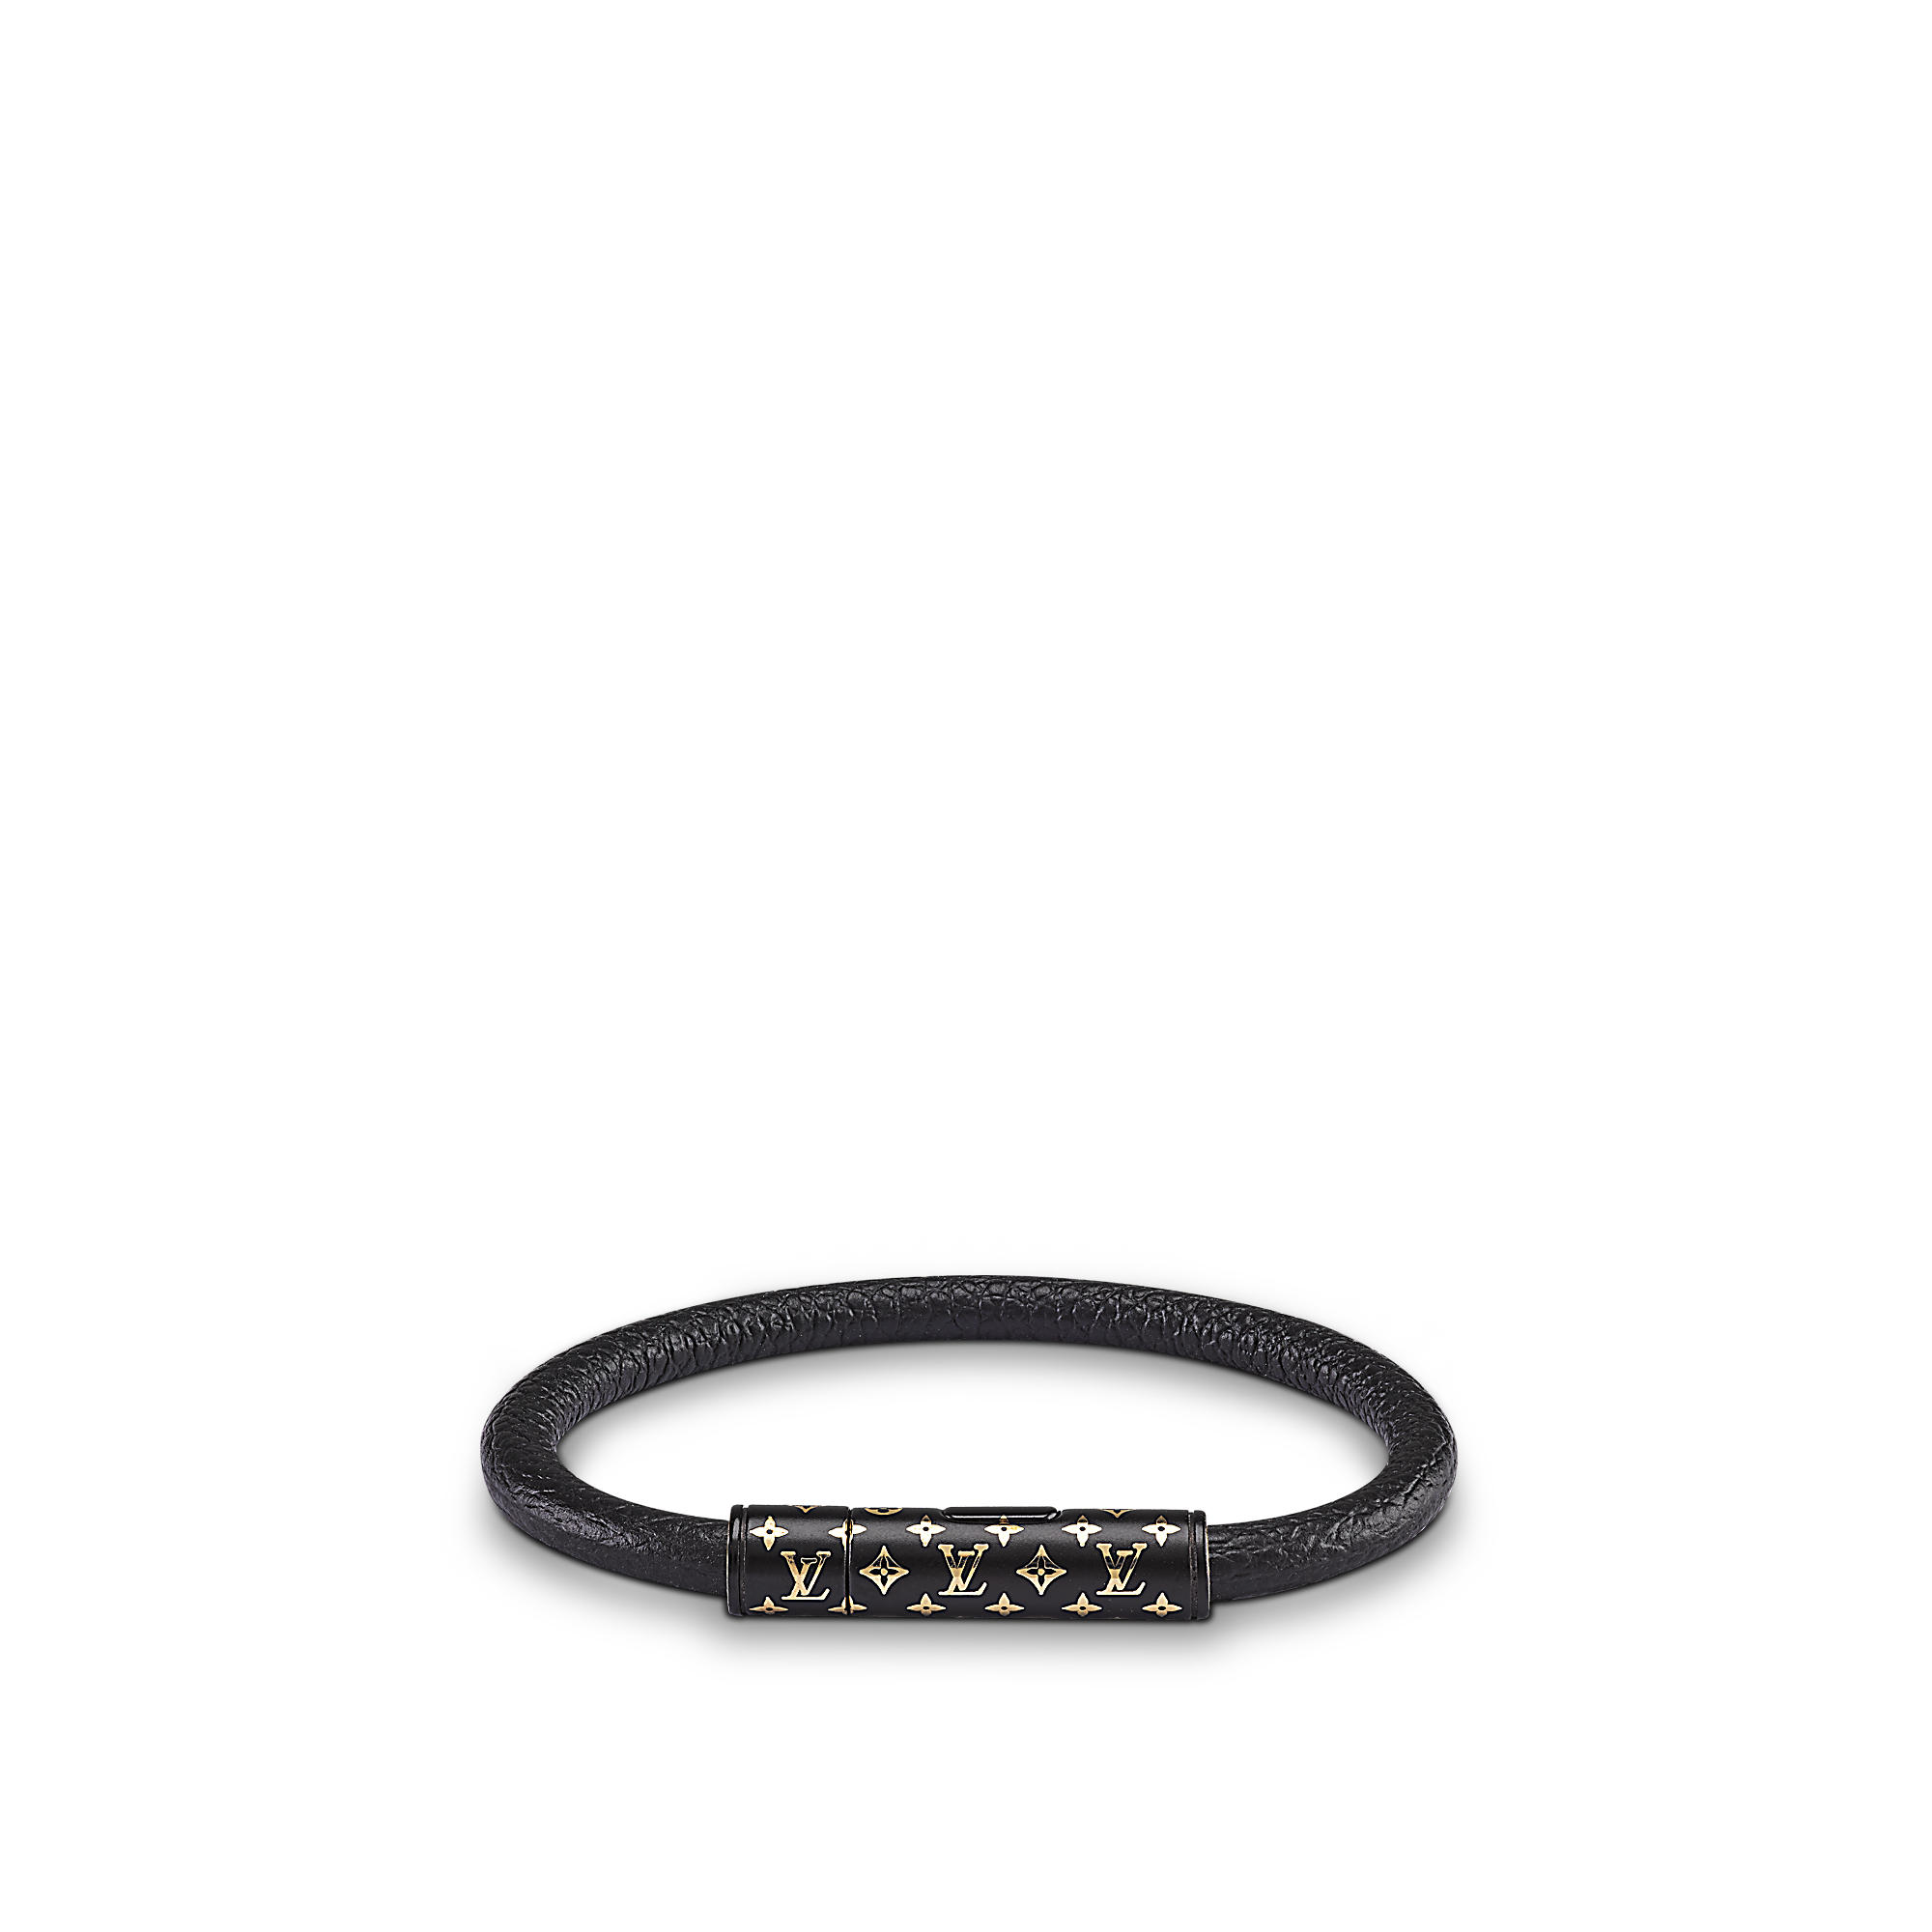 A LOUIS VUITTON headband model Confidential in new black…